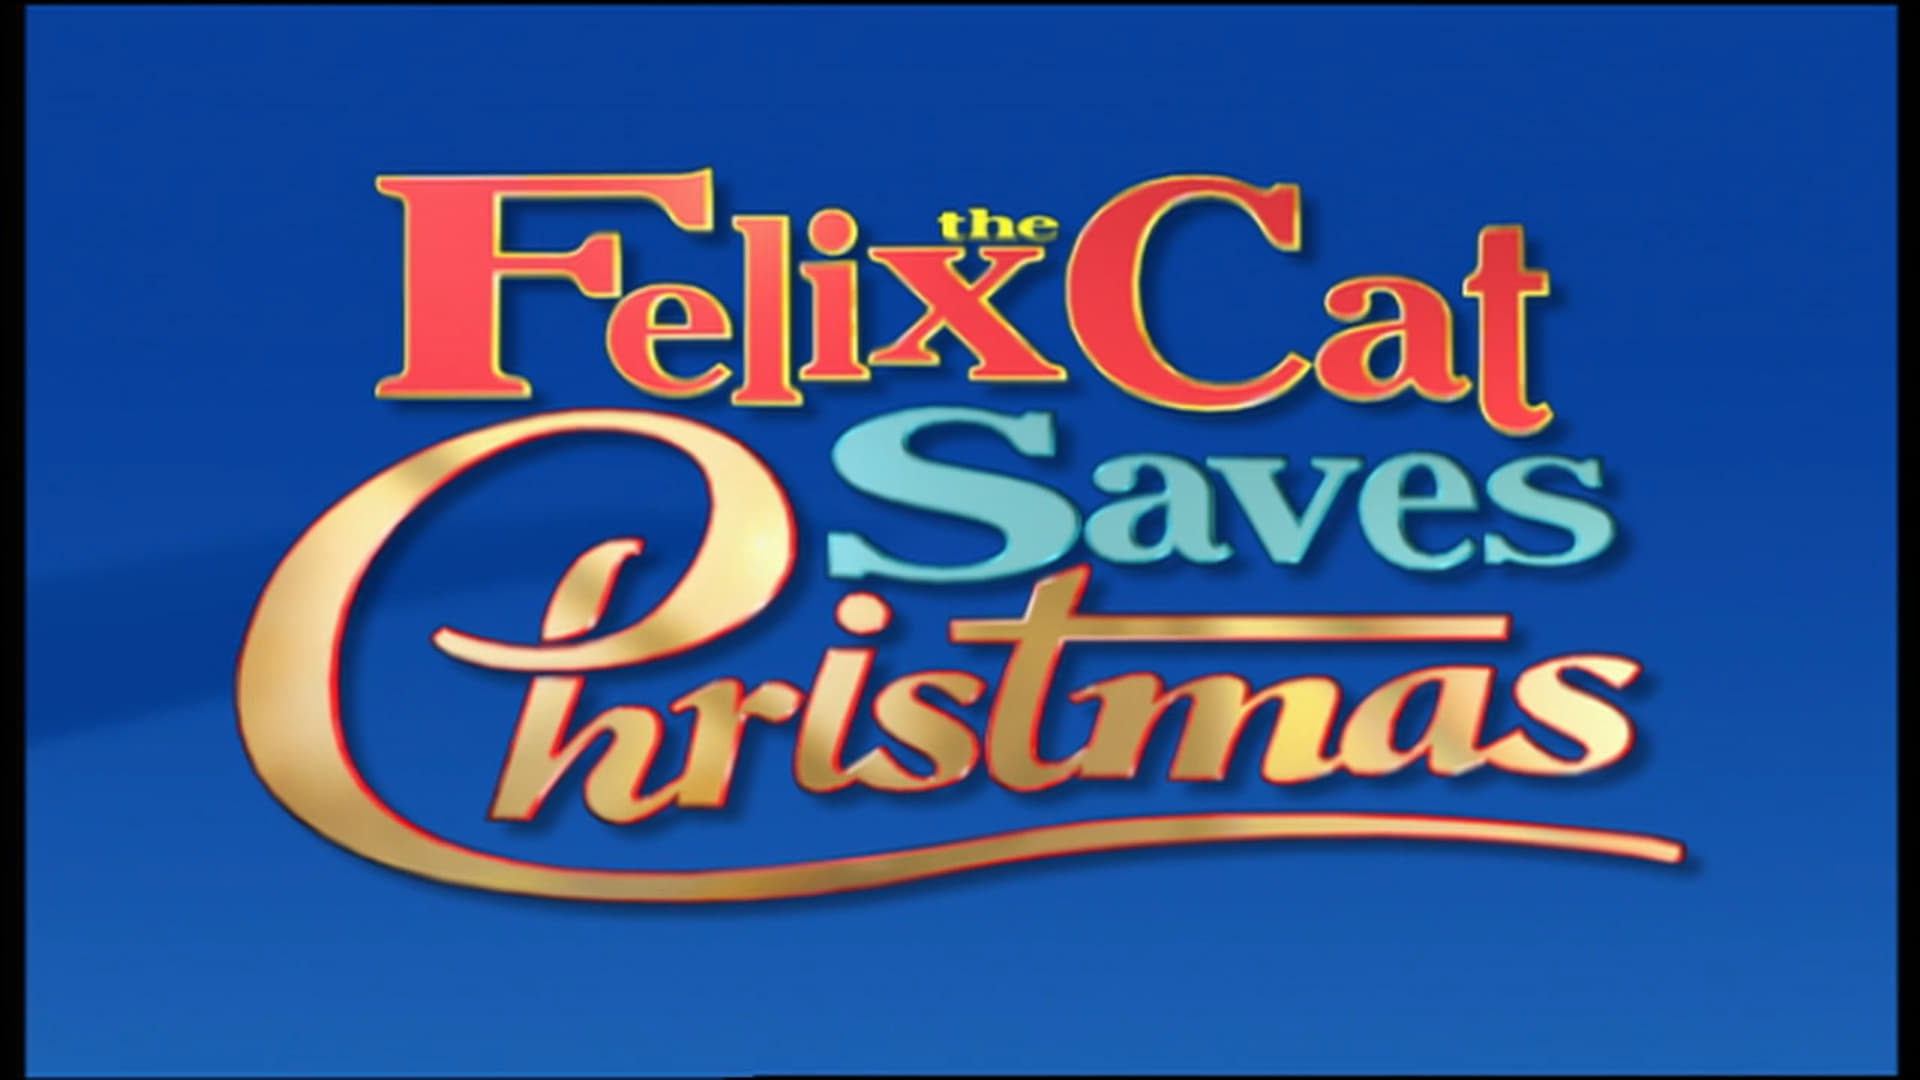 Felix the Cat Saves Christmas (2004)